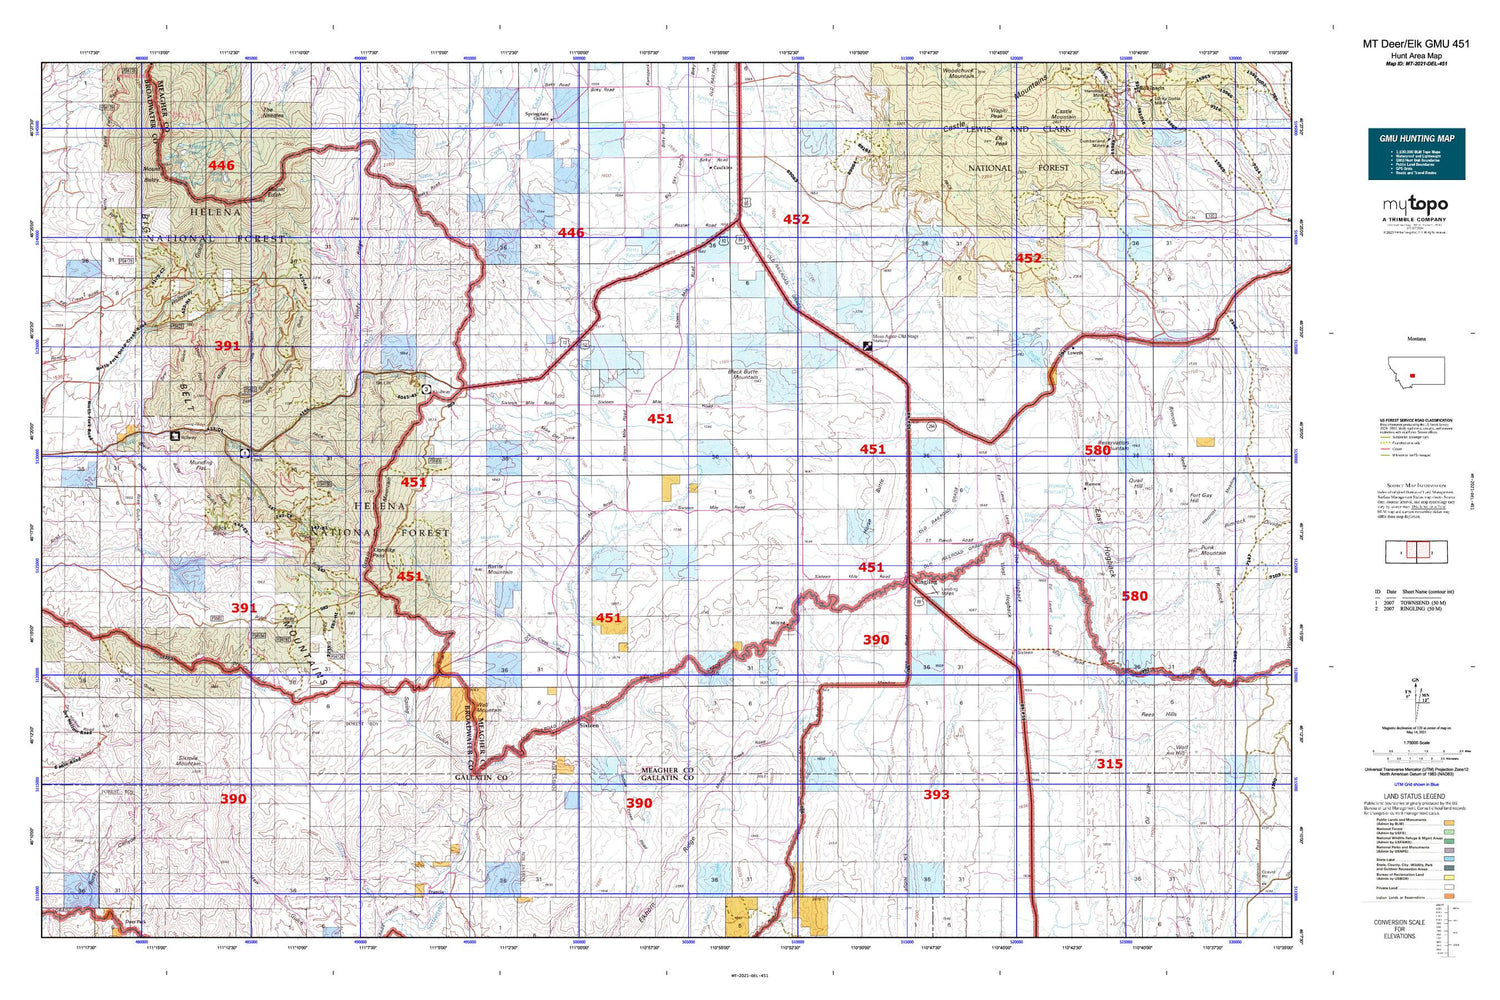 Montana Deer/Elk GMU 451 Map Image